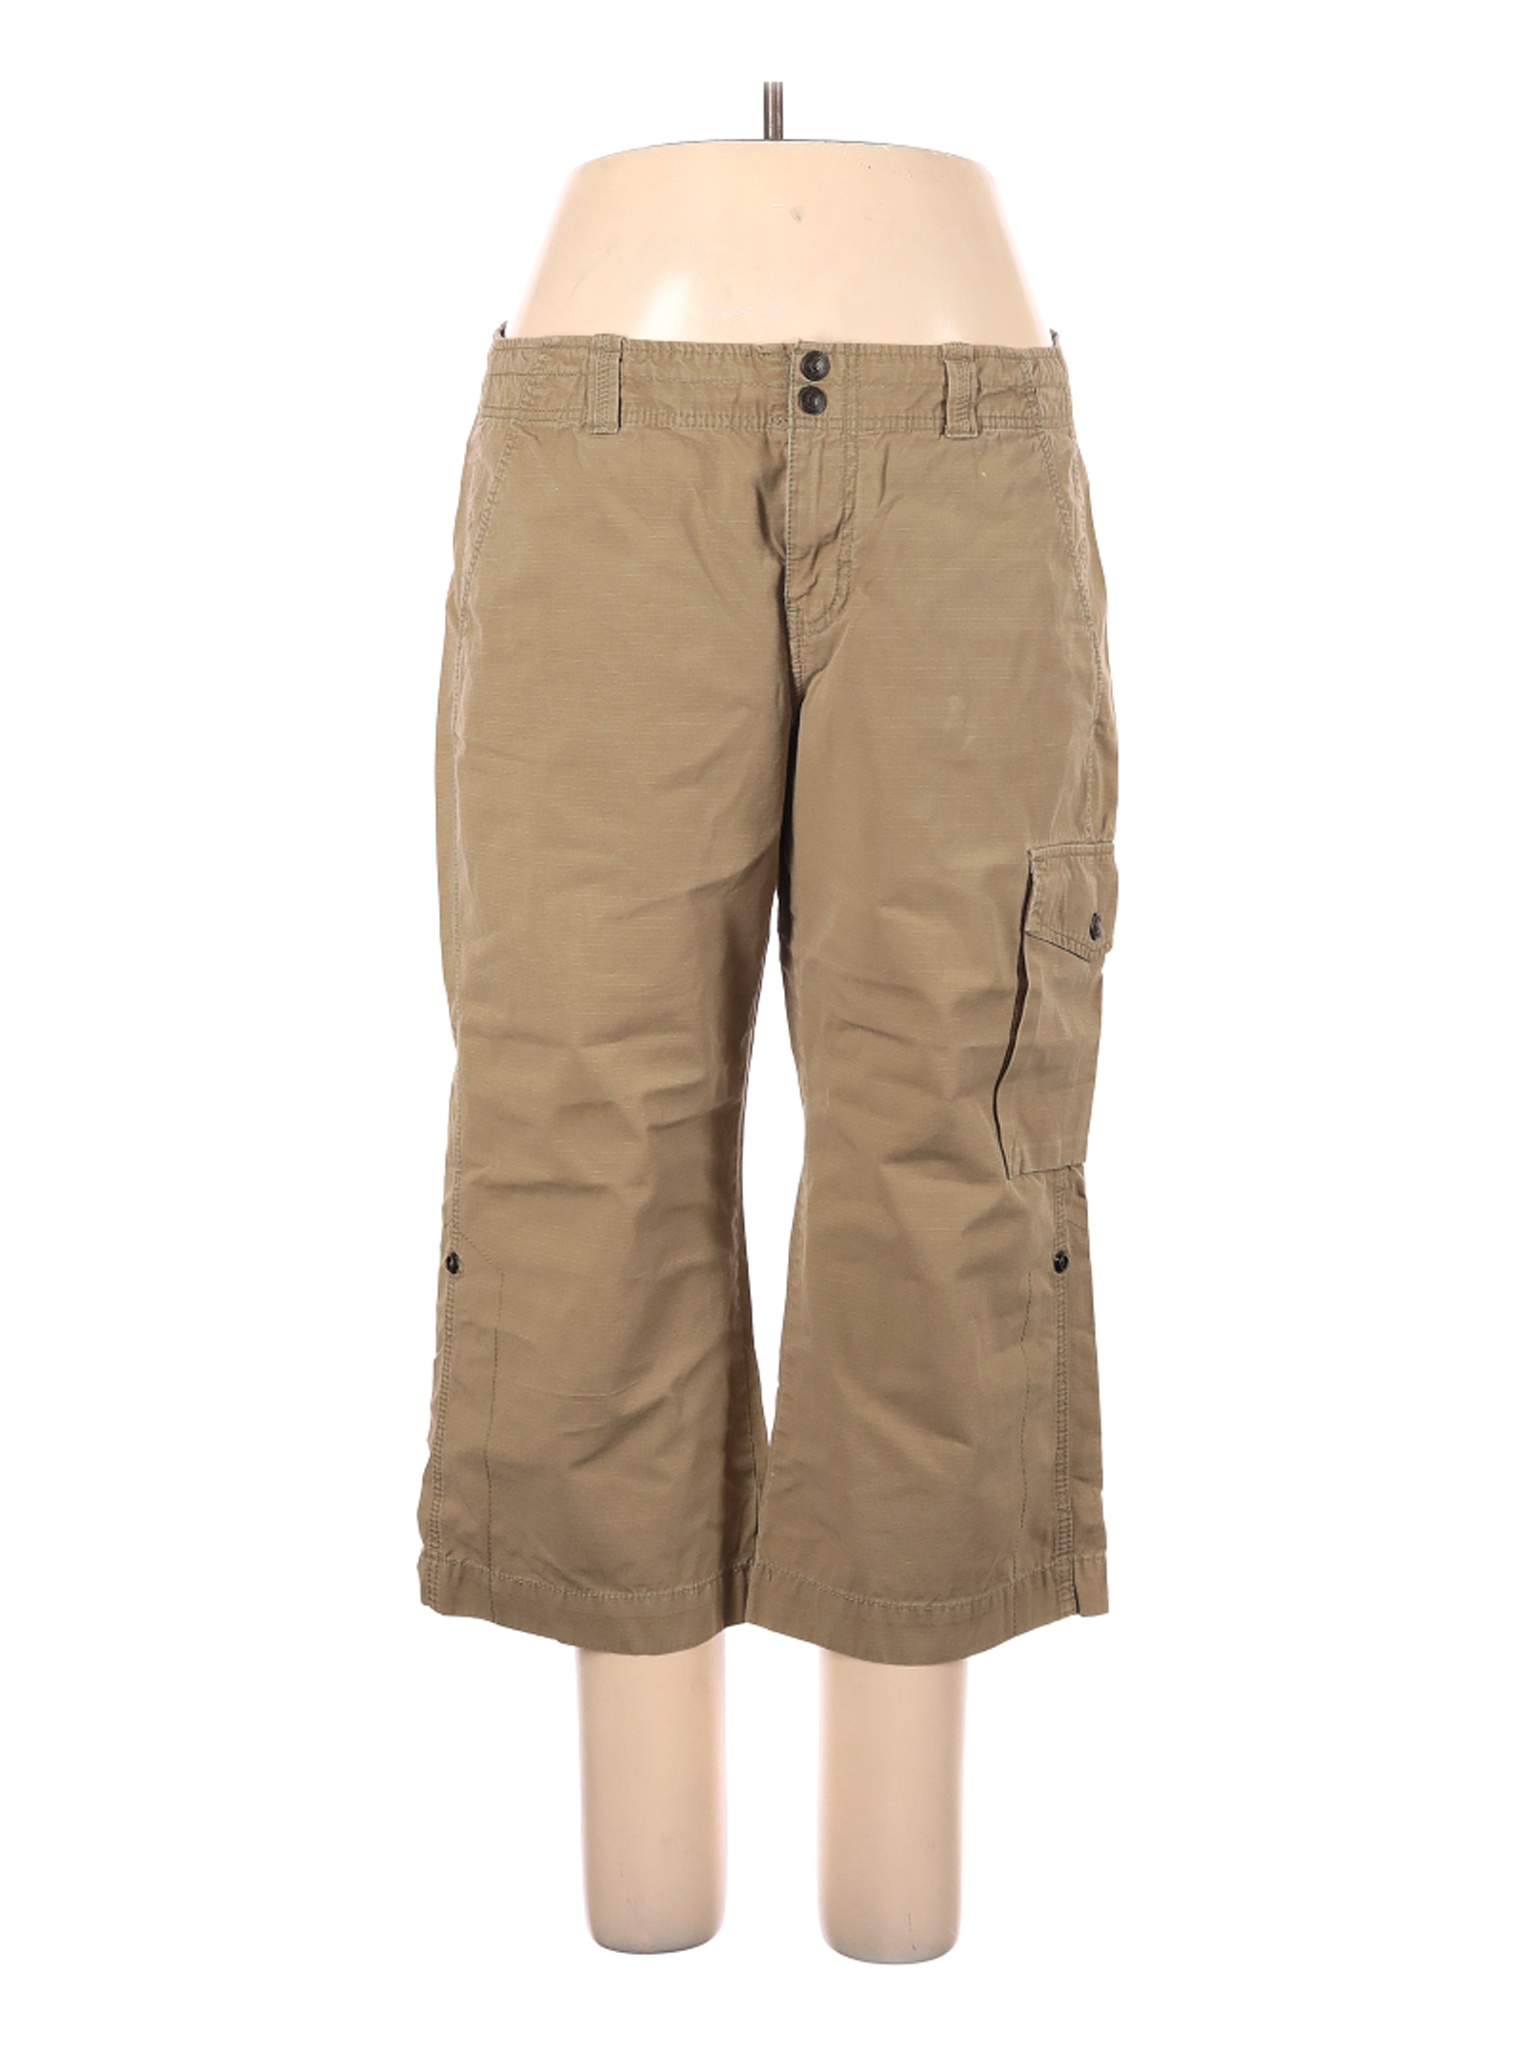 Gap Women Brown Cargo Pants 16 | eBay